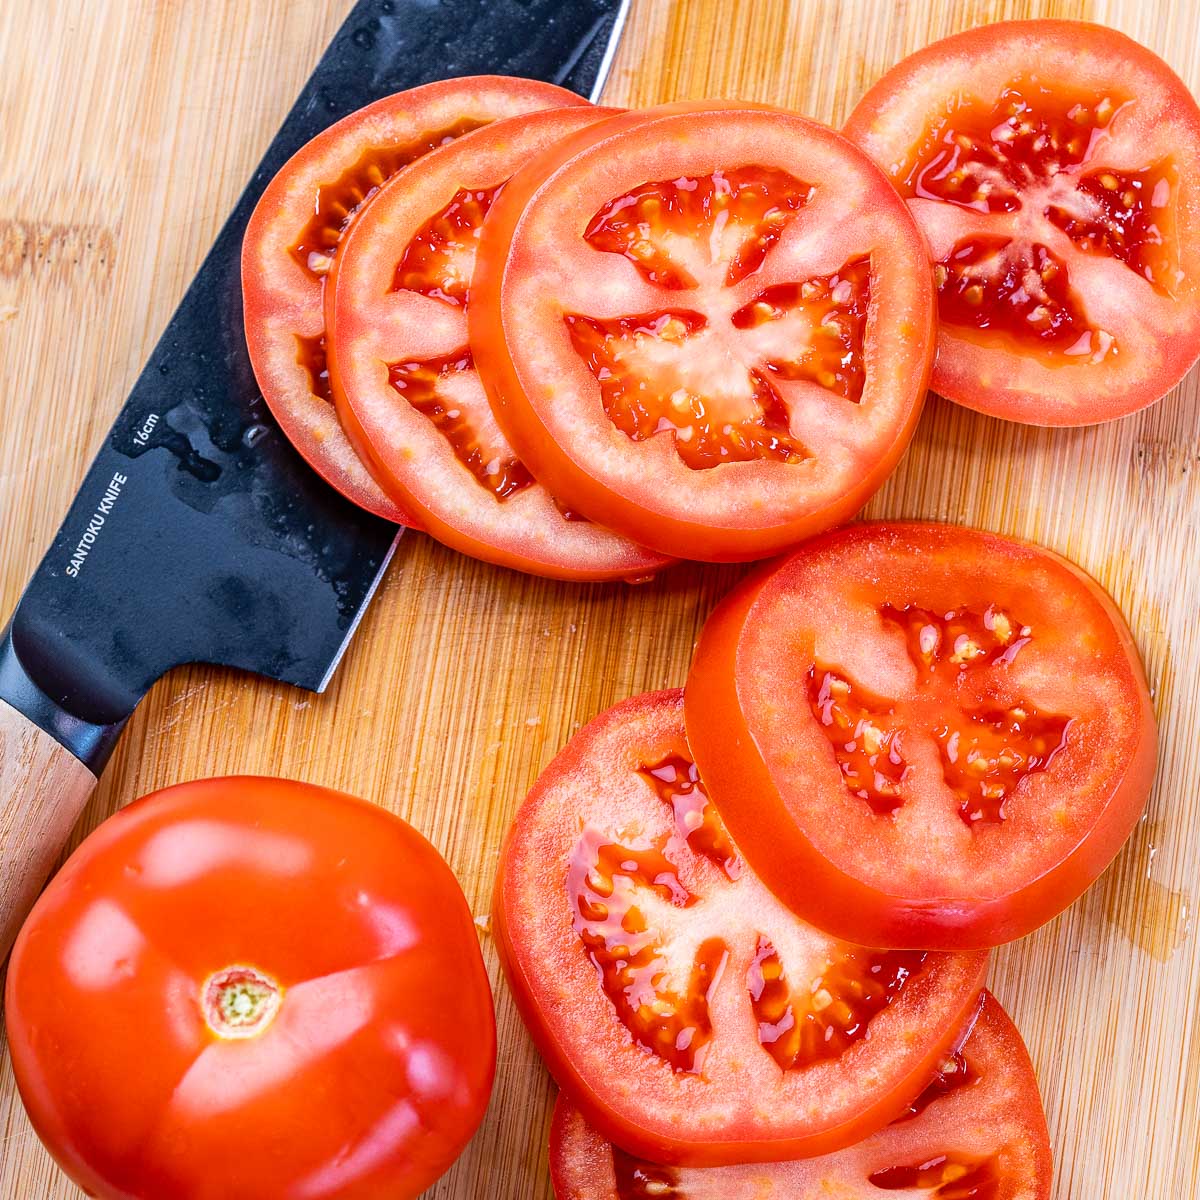 How long do cut tomatoes last in the fridge